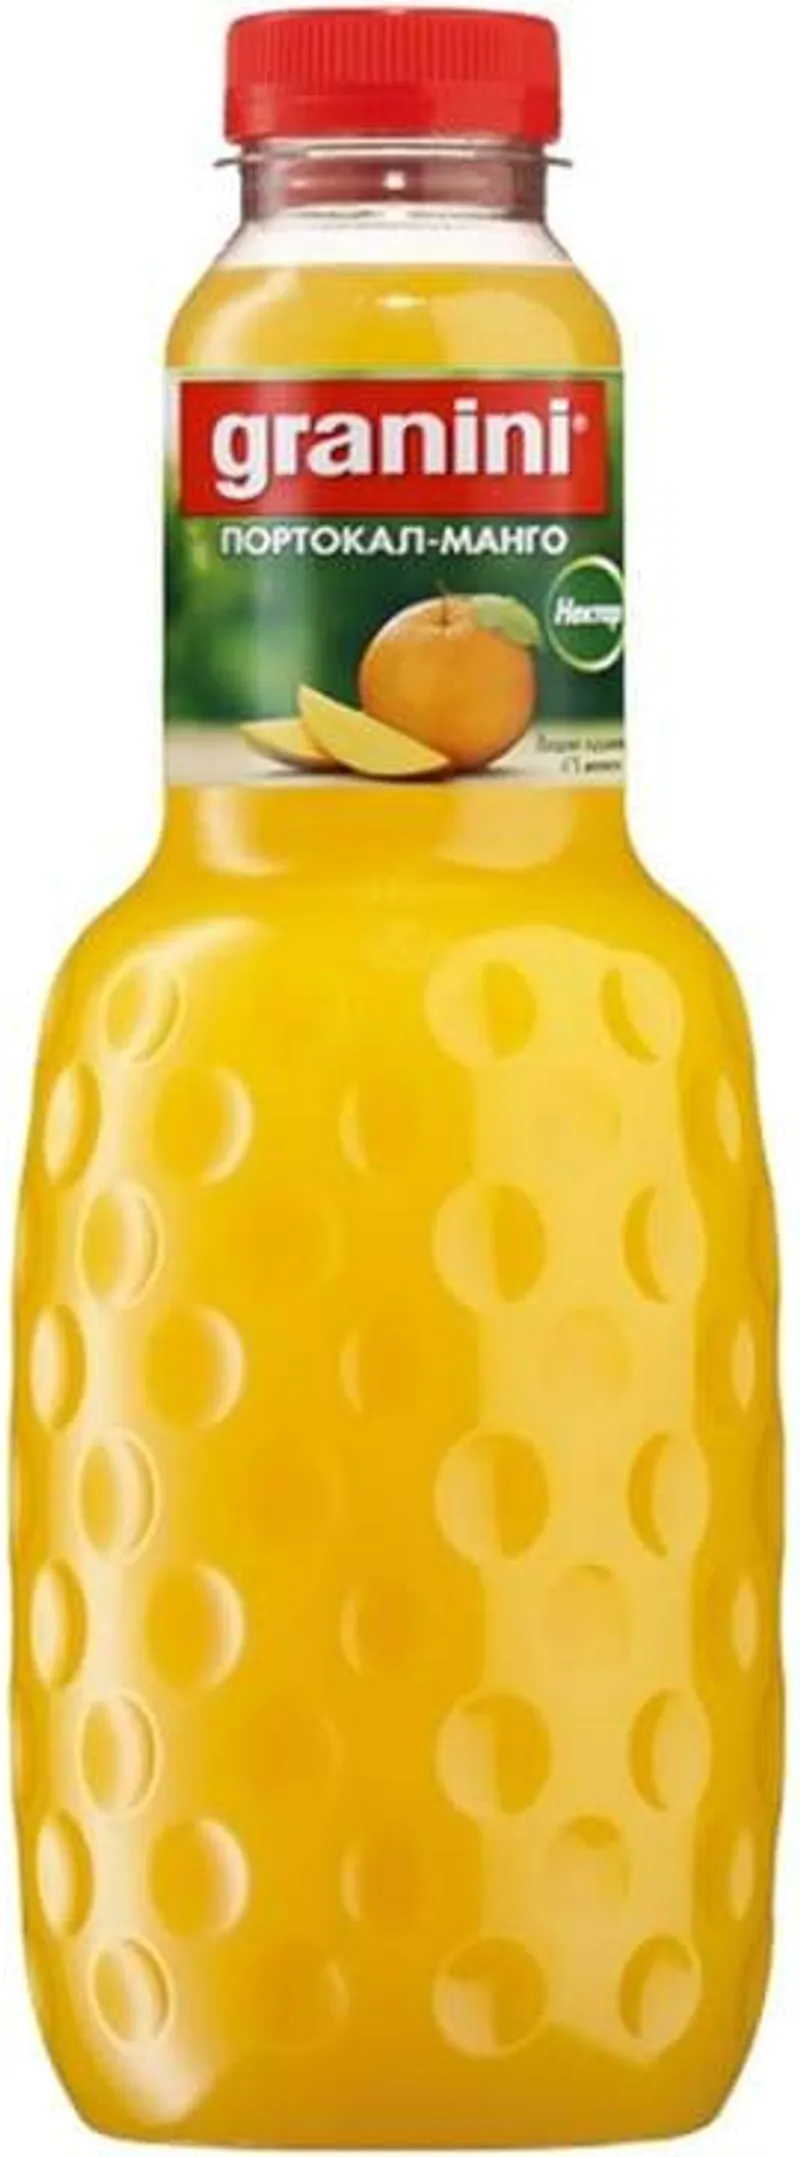 Нектар Granini Портокал и манго (1л)